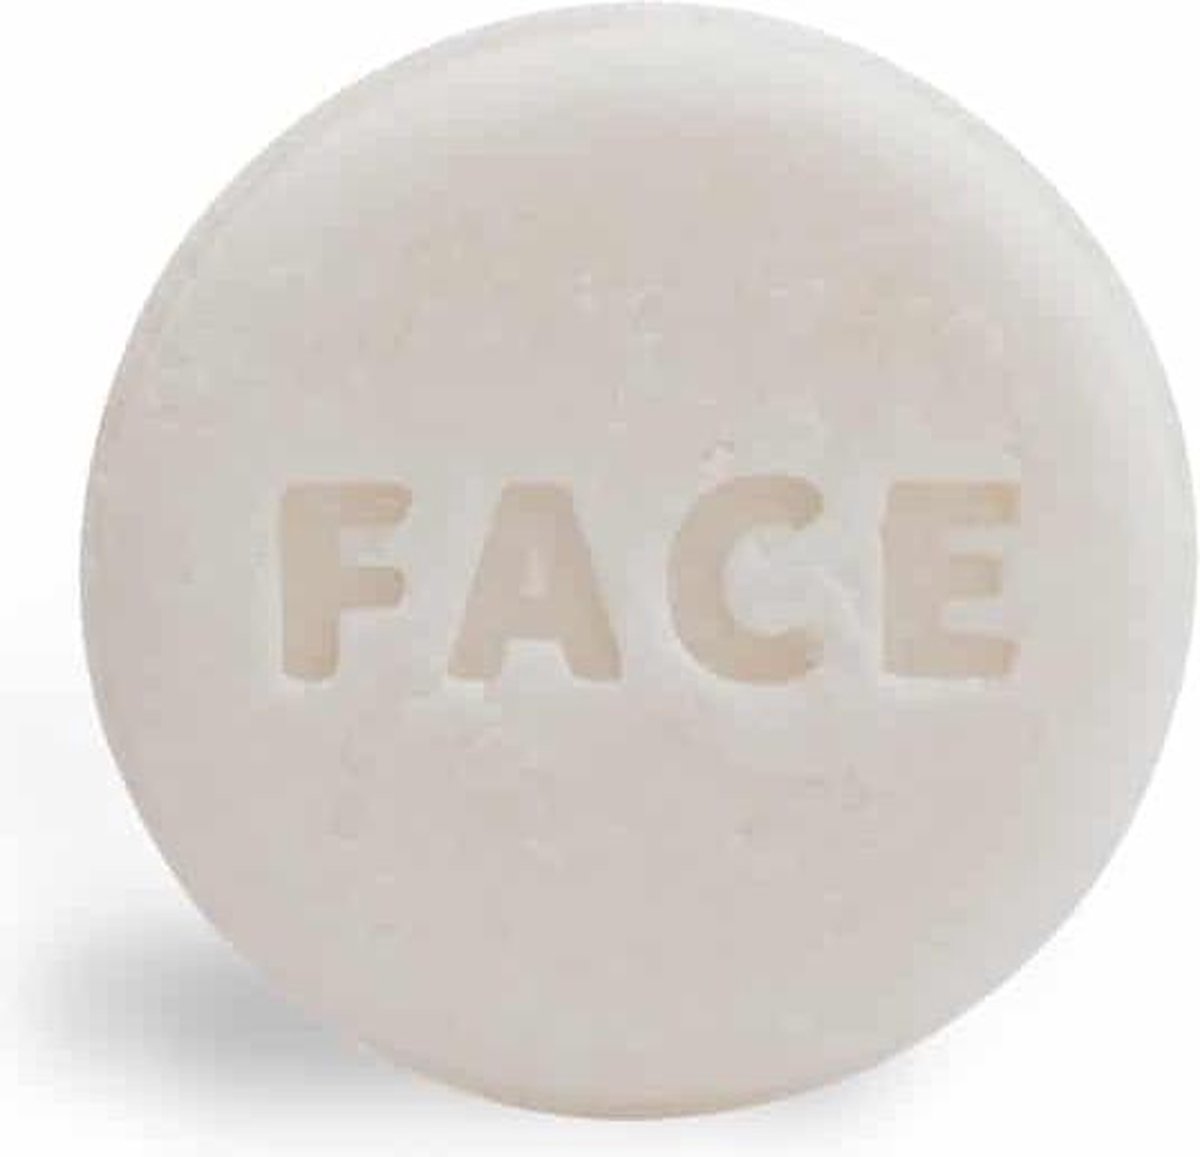 Shampoo Bars - Face Bar - Neutraal